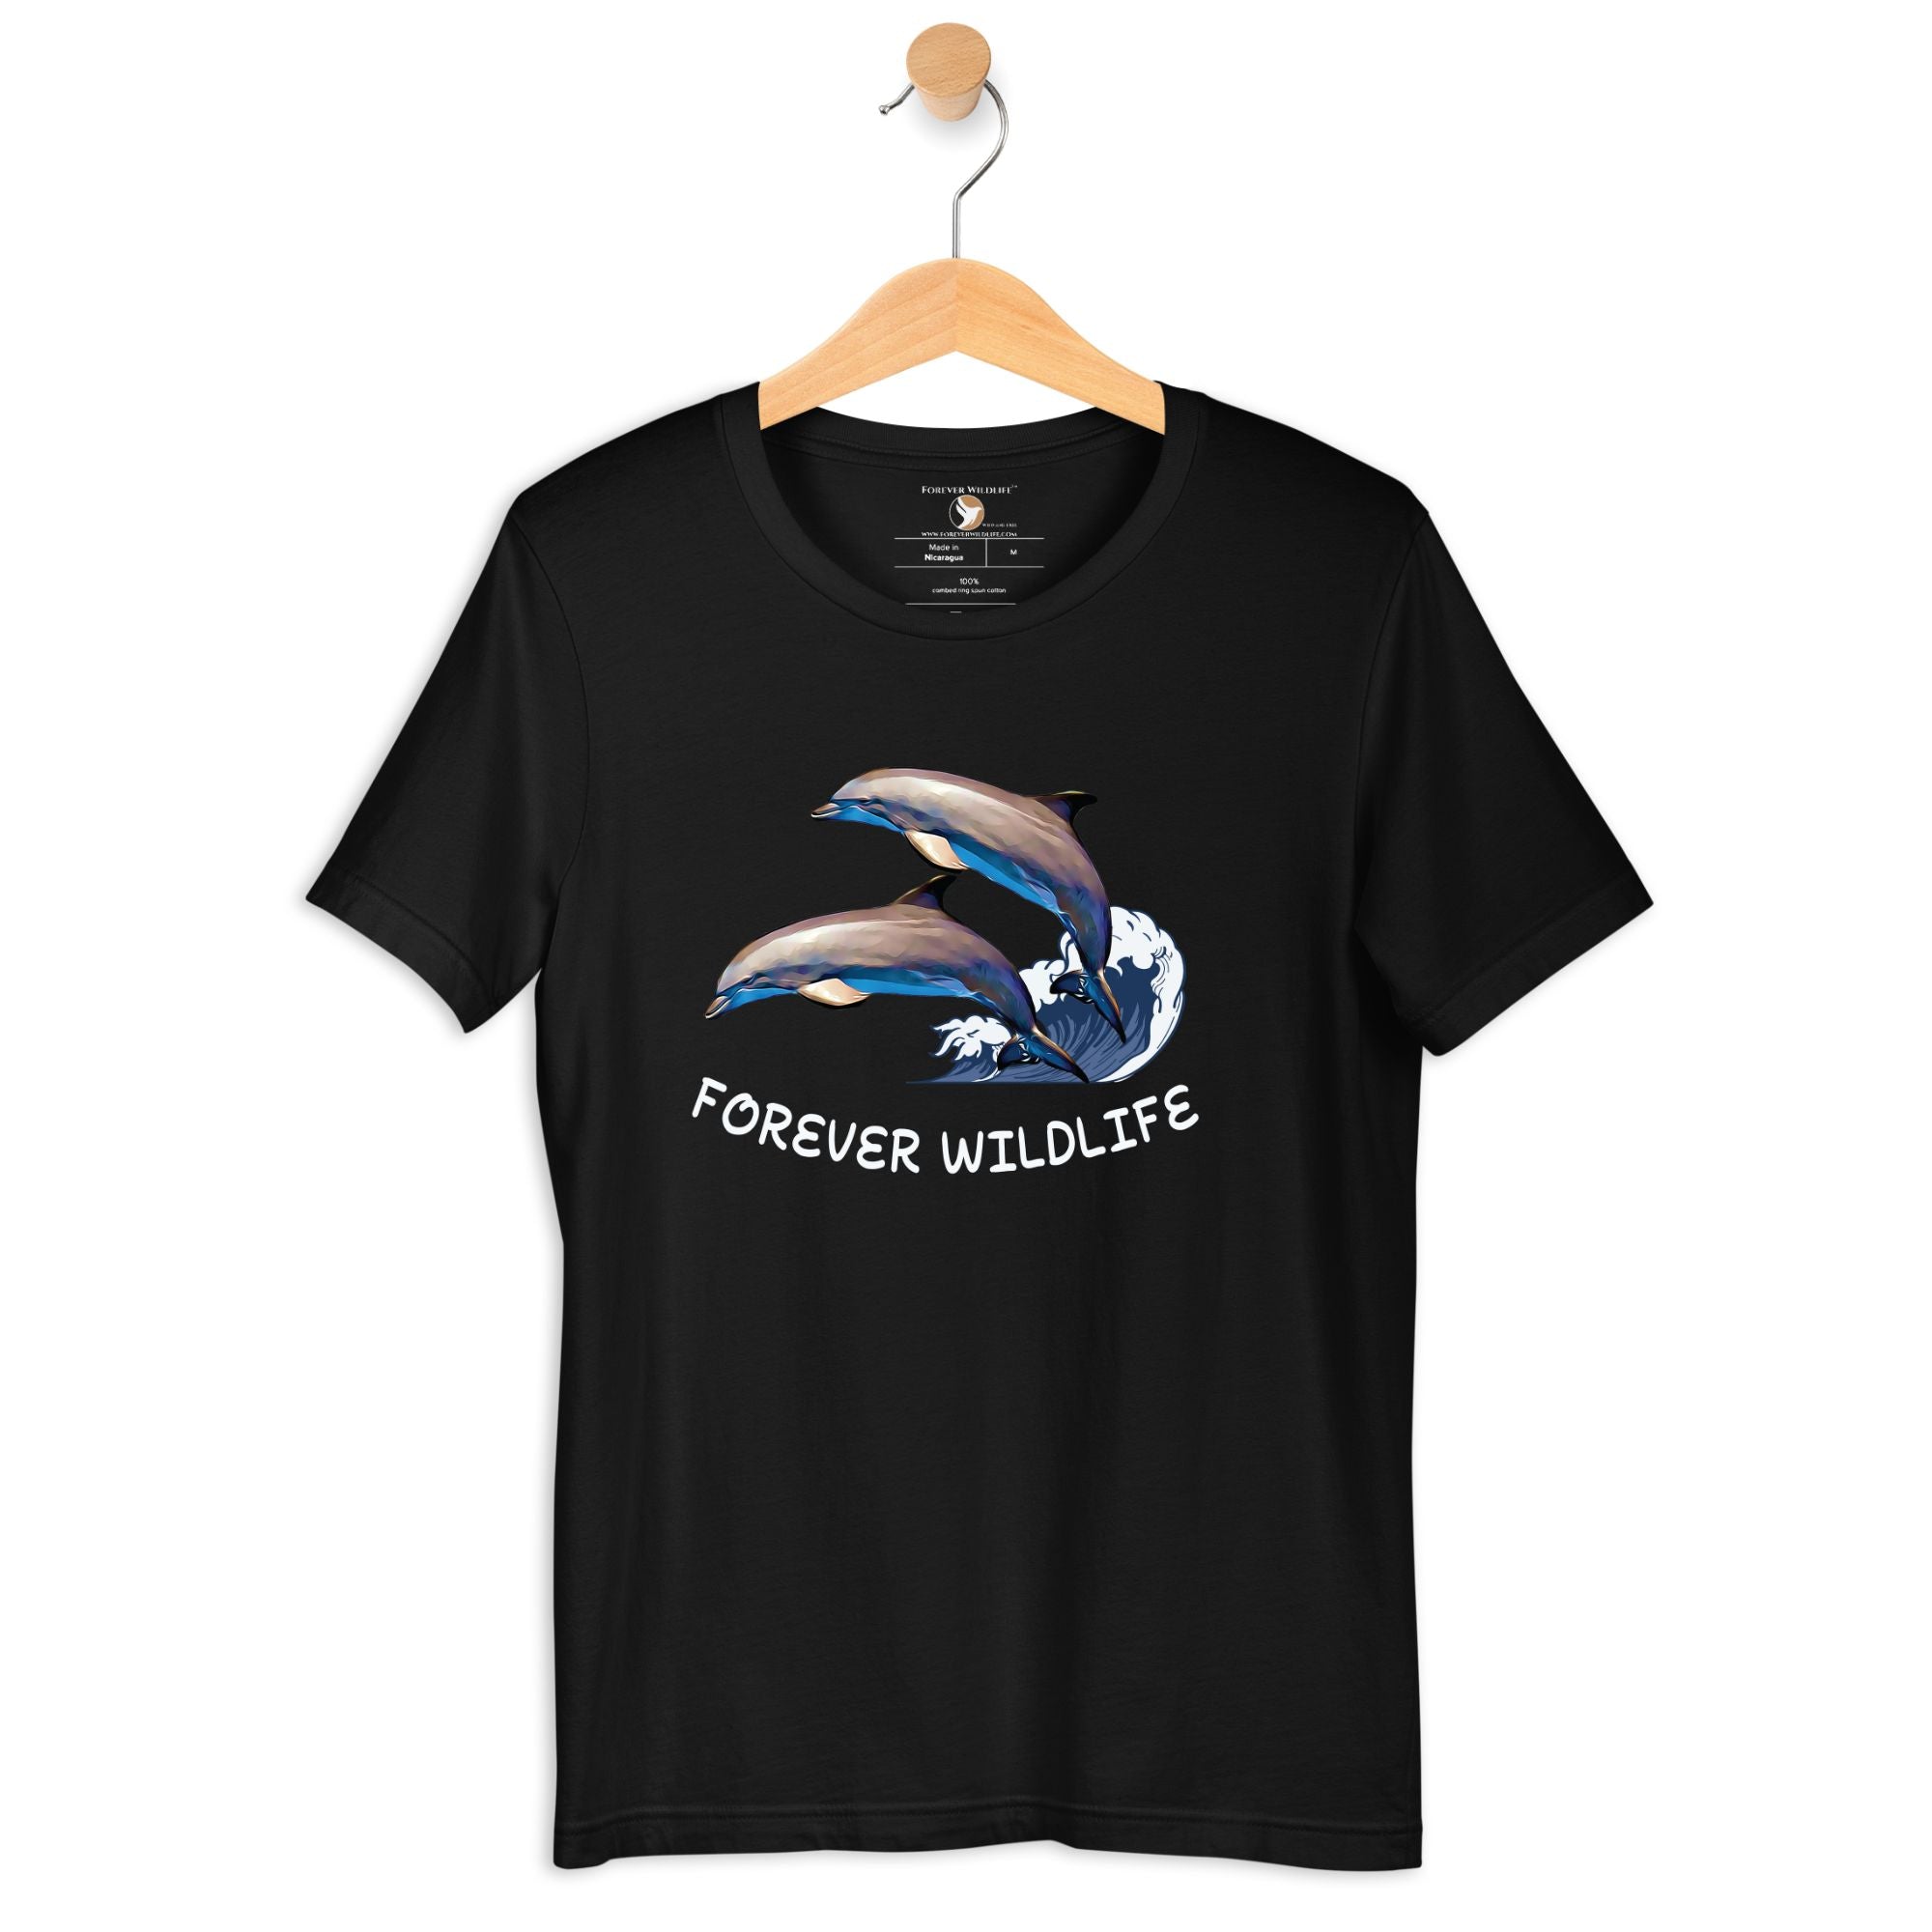 Dolphin T-Shirt in Black – Premium Wildlife T-Shirt Design, Wildlife Clothing & Apparel from Forever Wildlife